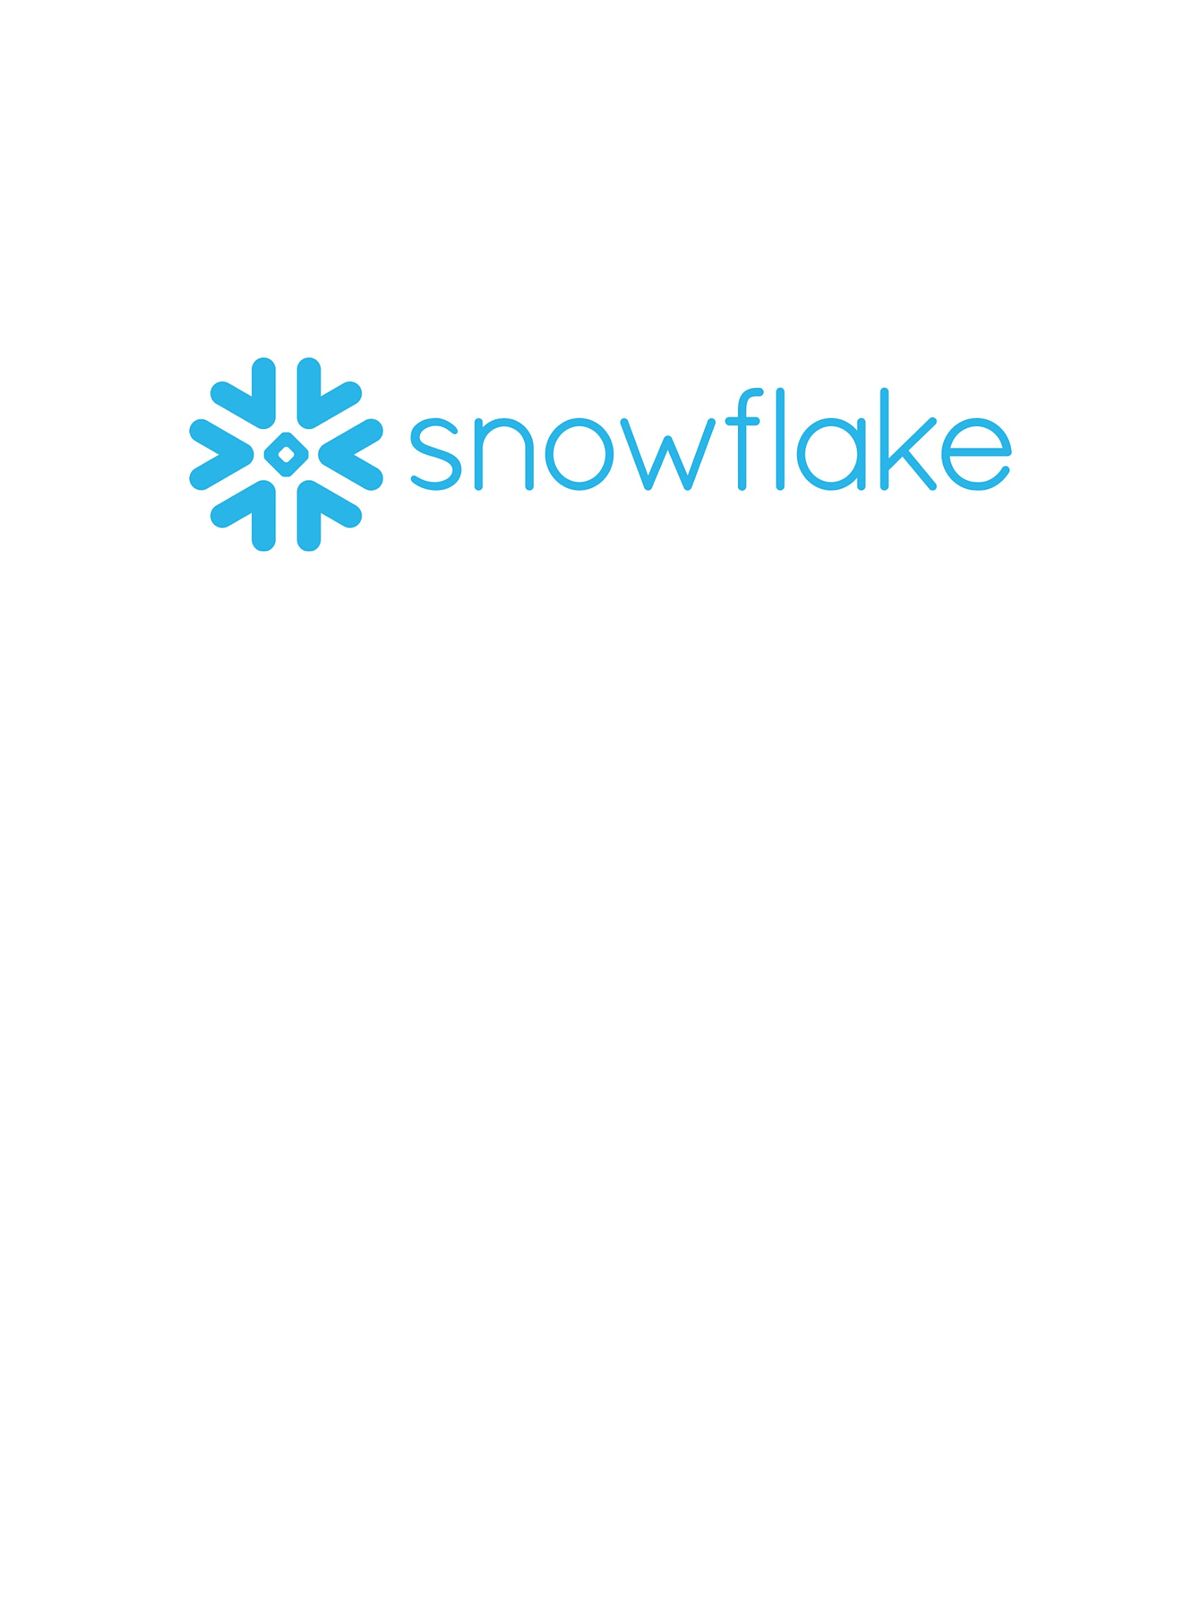 4 Weeks Snowflake cloud data platform Training Course Alexandria